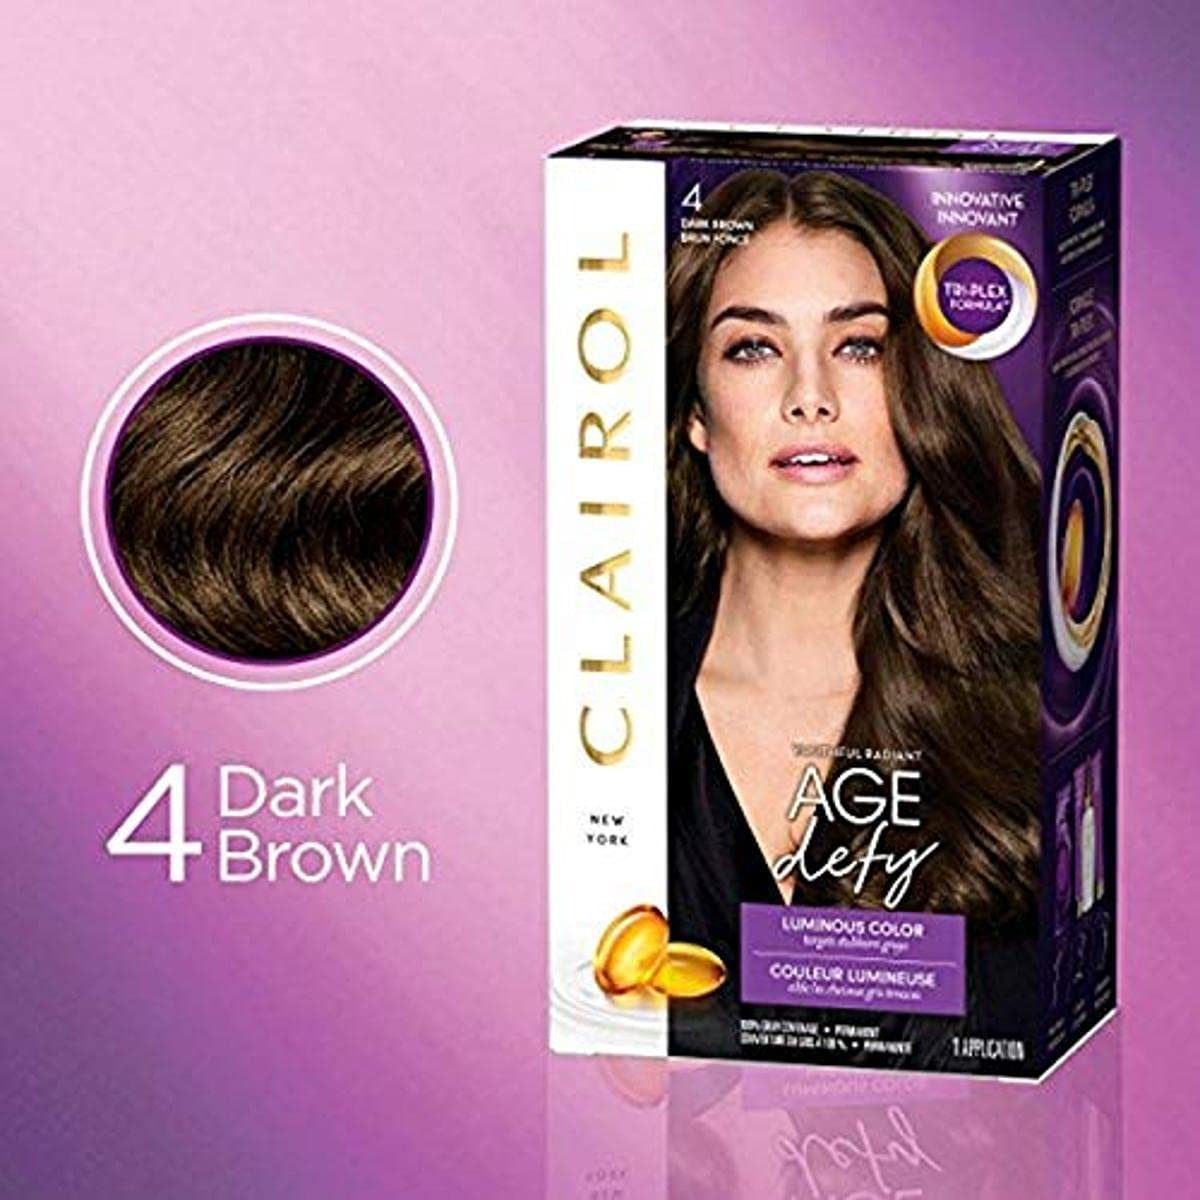 New Clairol Age Defy Permanent Hair Dye, 4 Dark Brown Hair Color